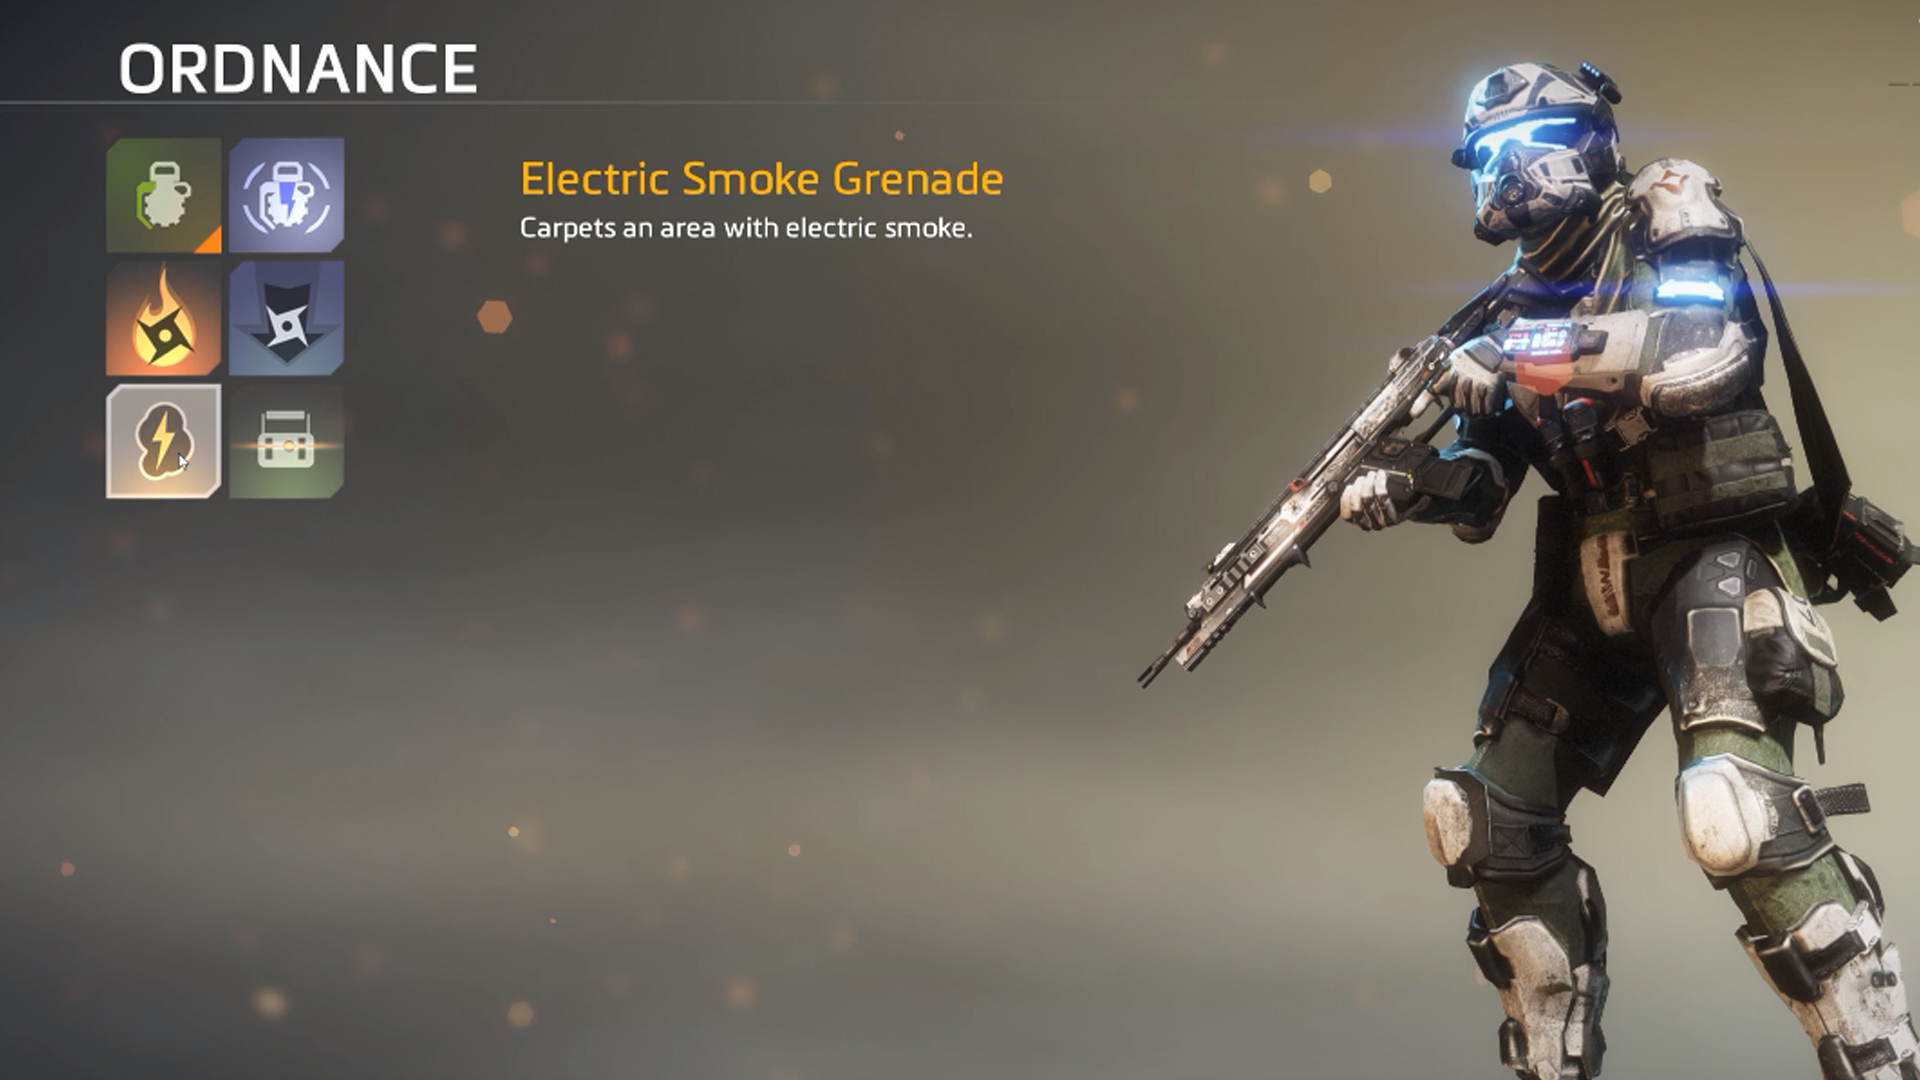 Ordinance - Electric Smoke Grenade